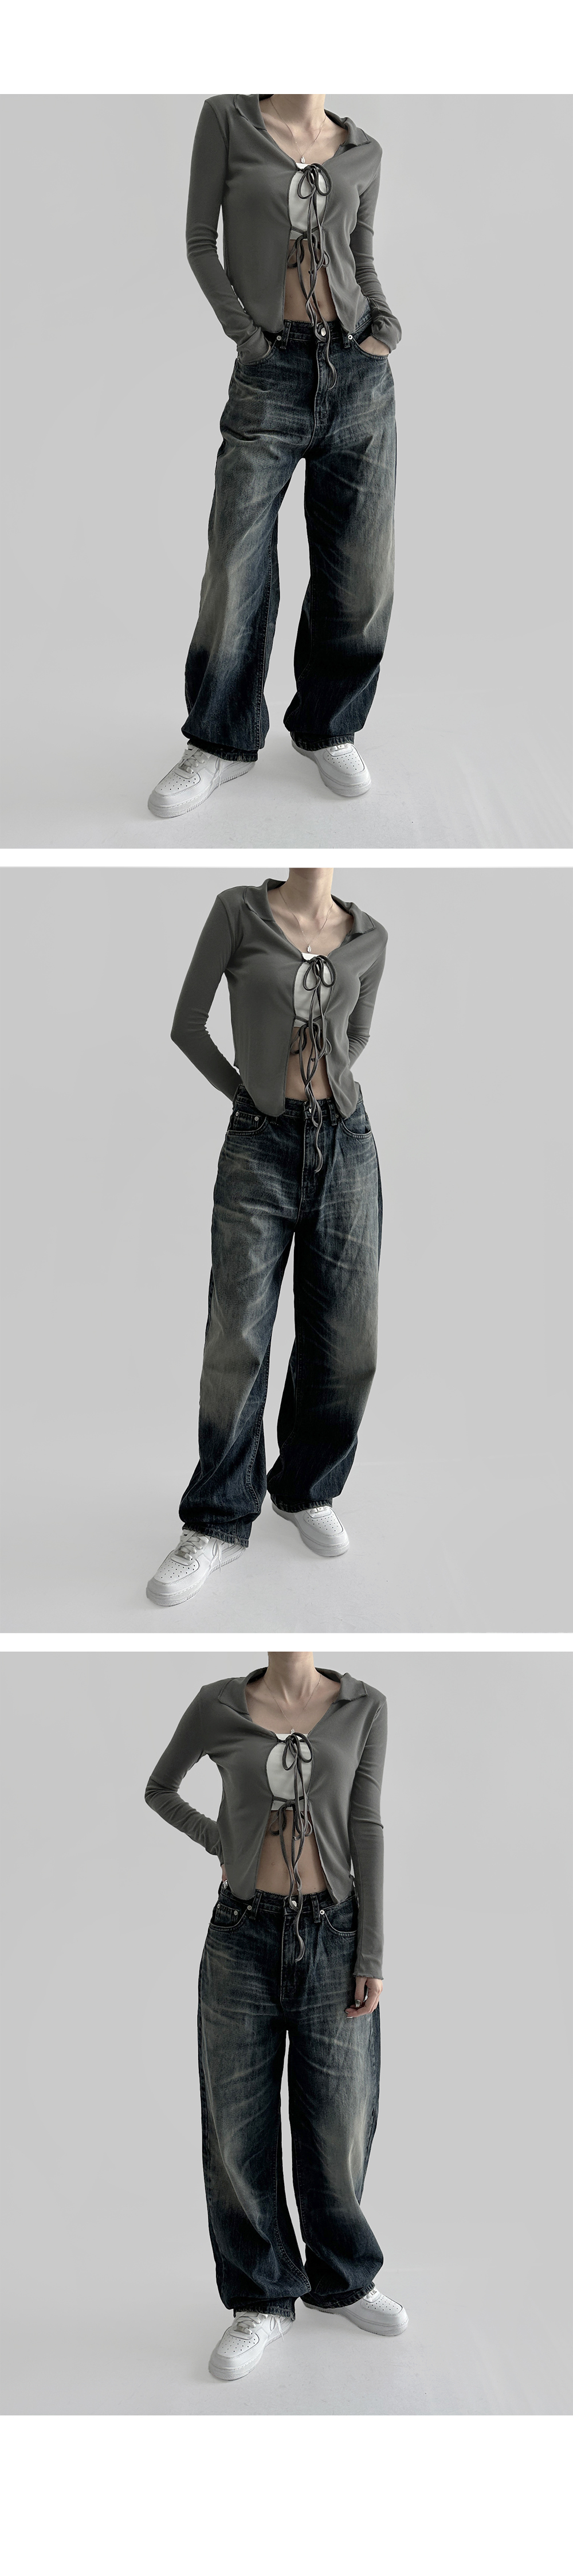 suspenders skirt/pants charcoal color image-S2L1